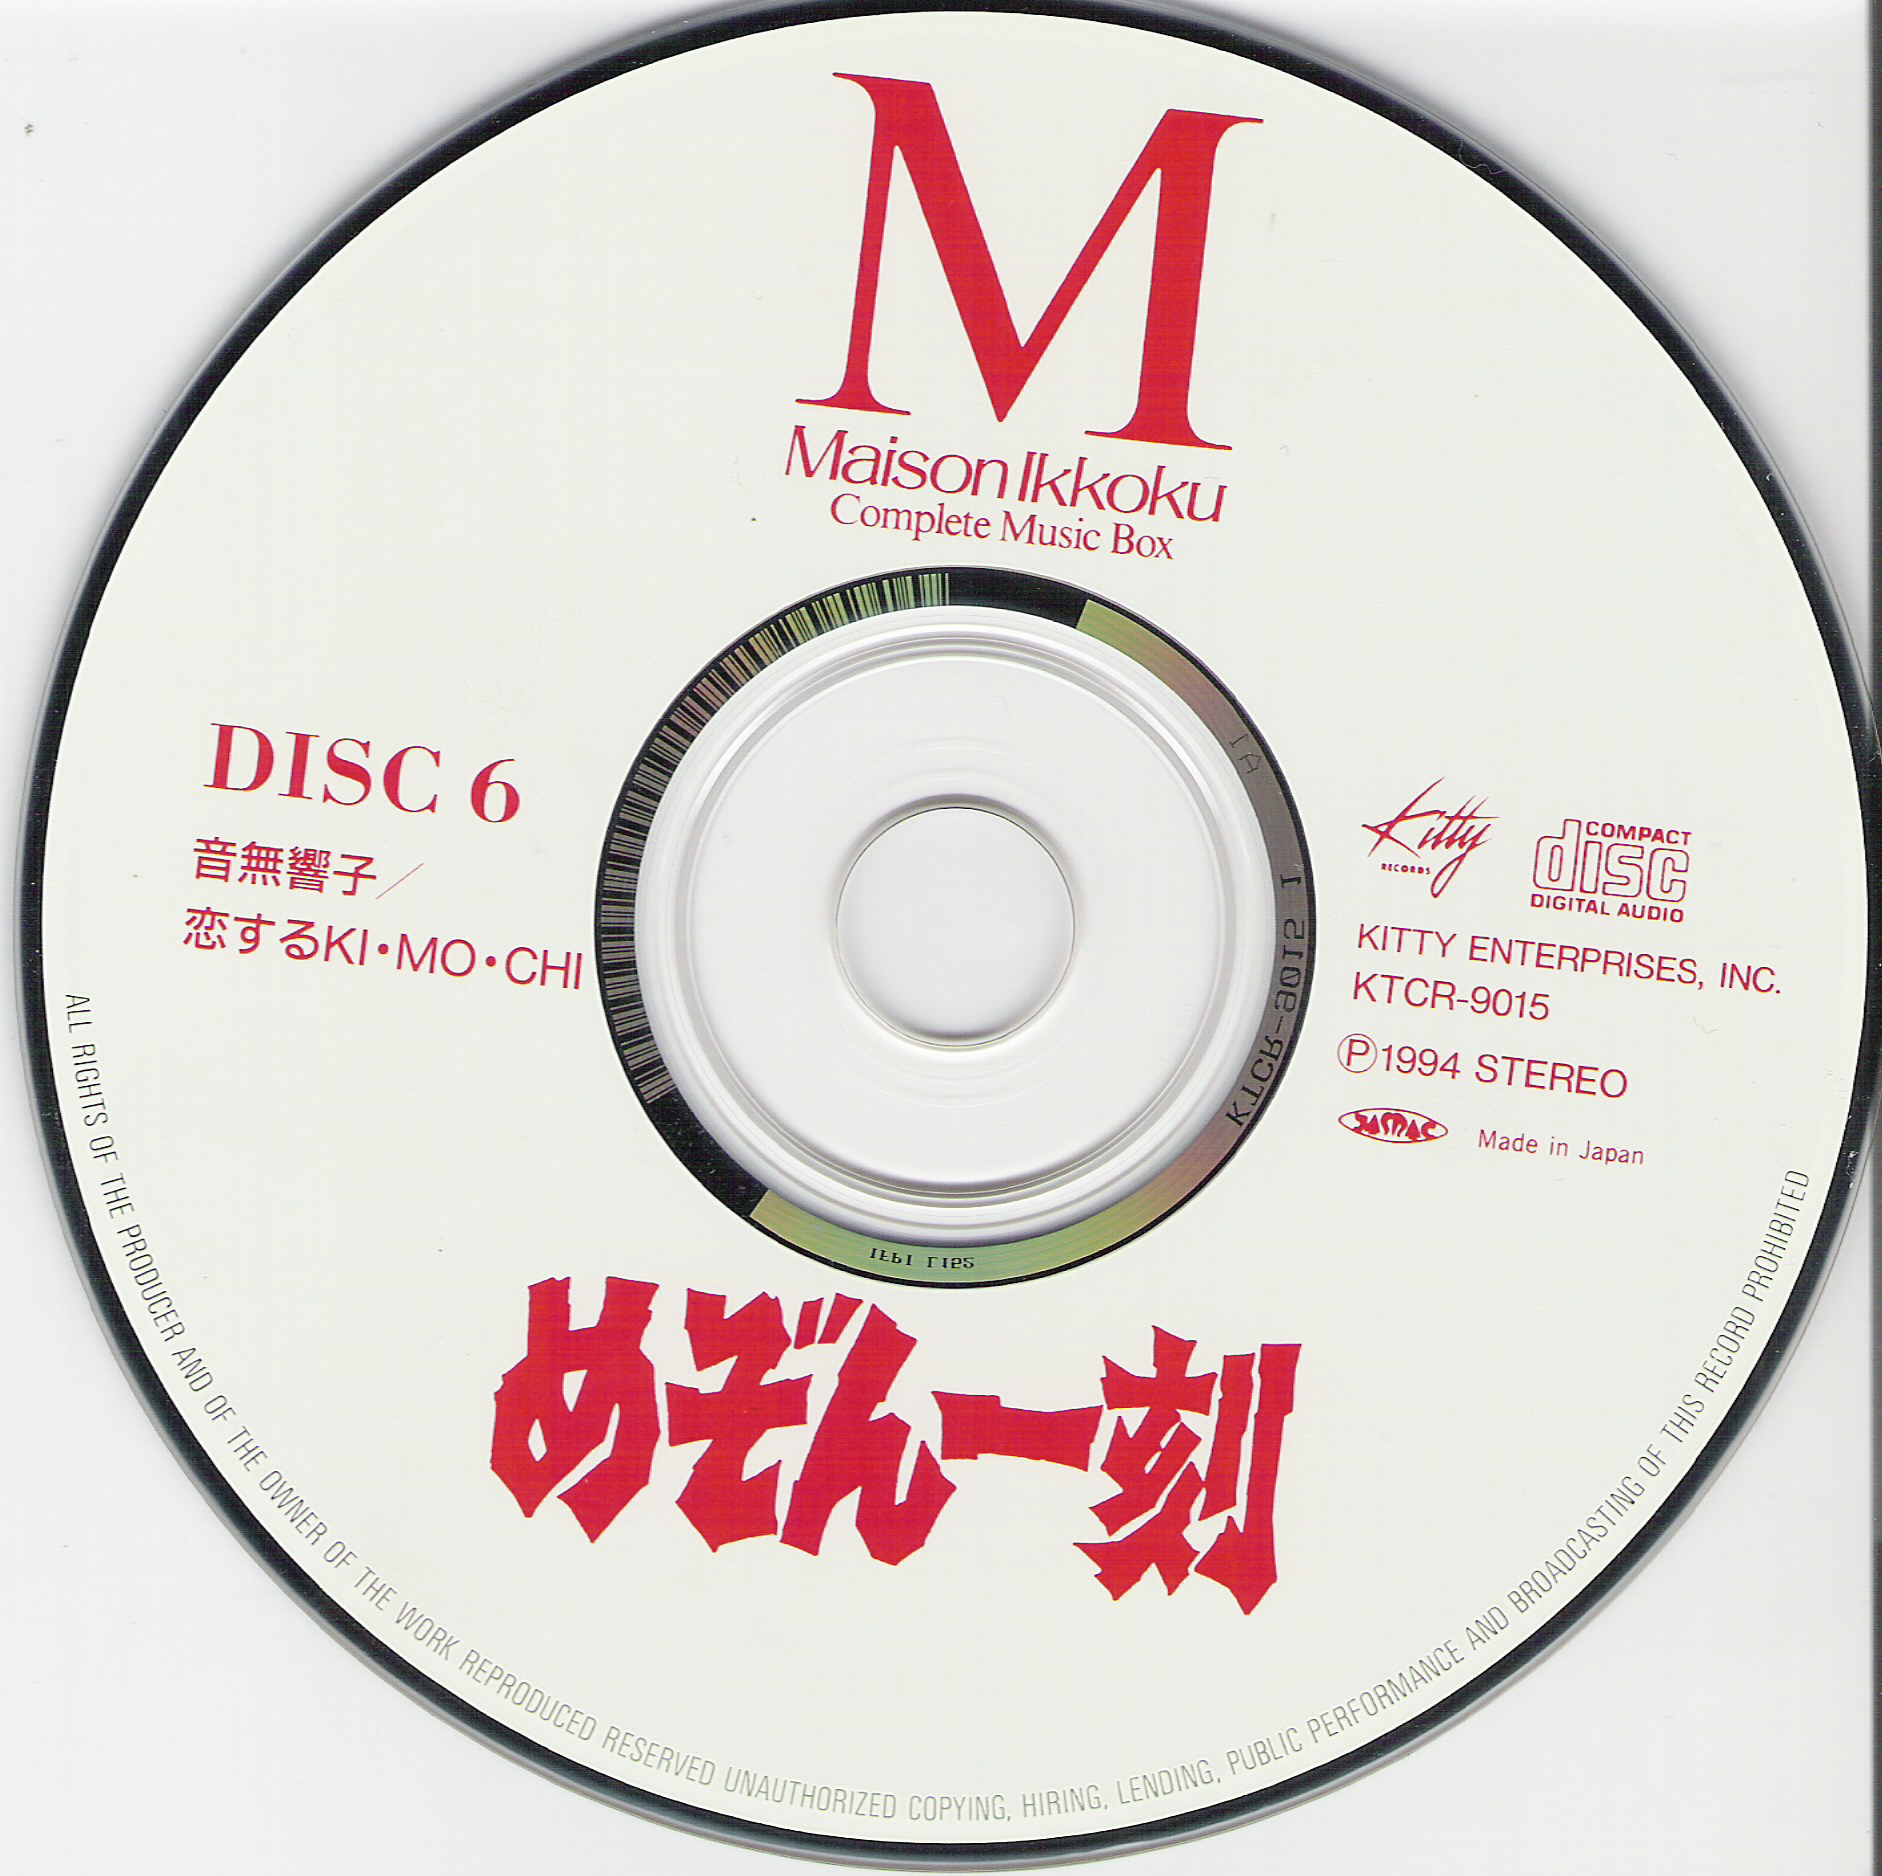 Maison Ikkoku Music Collection Disc 6.jpg